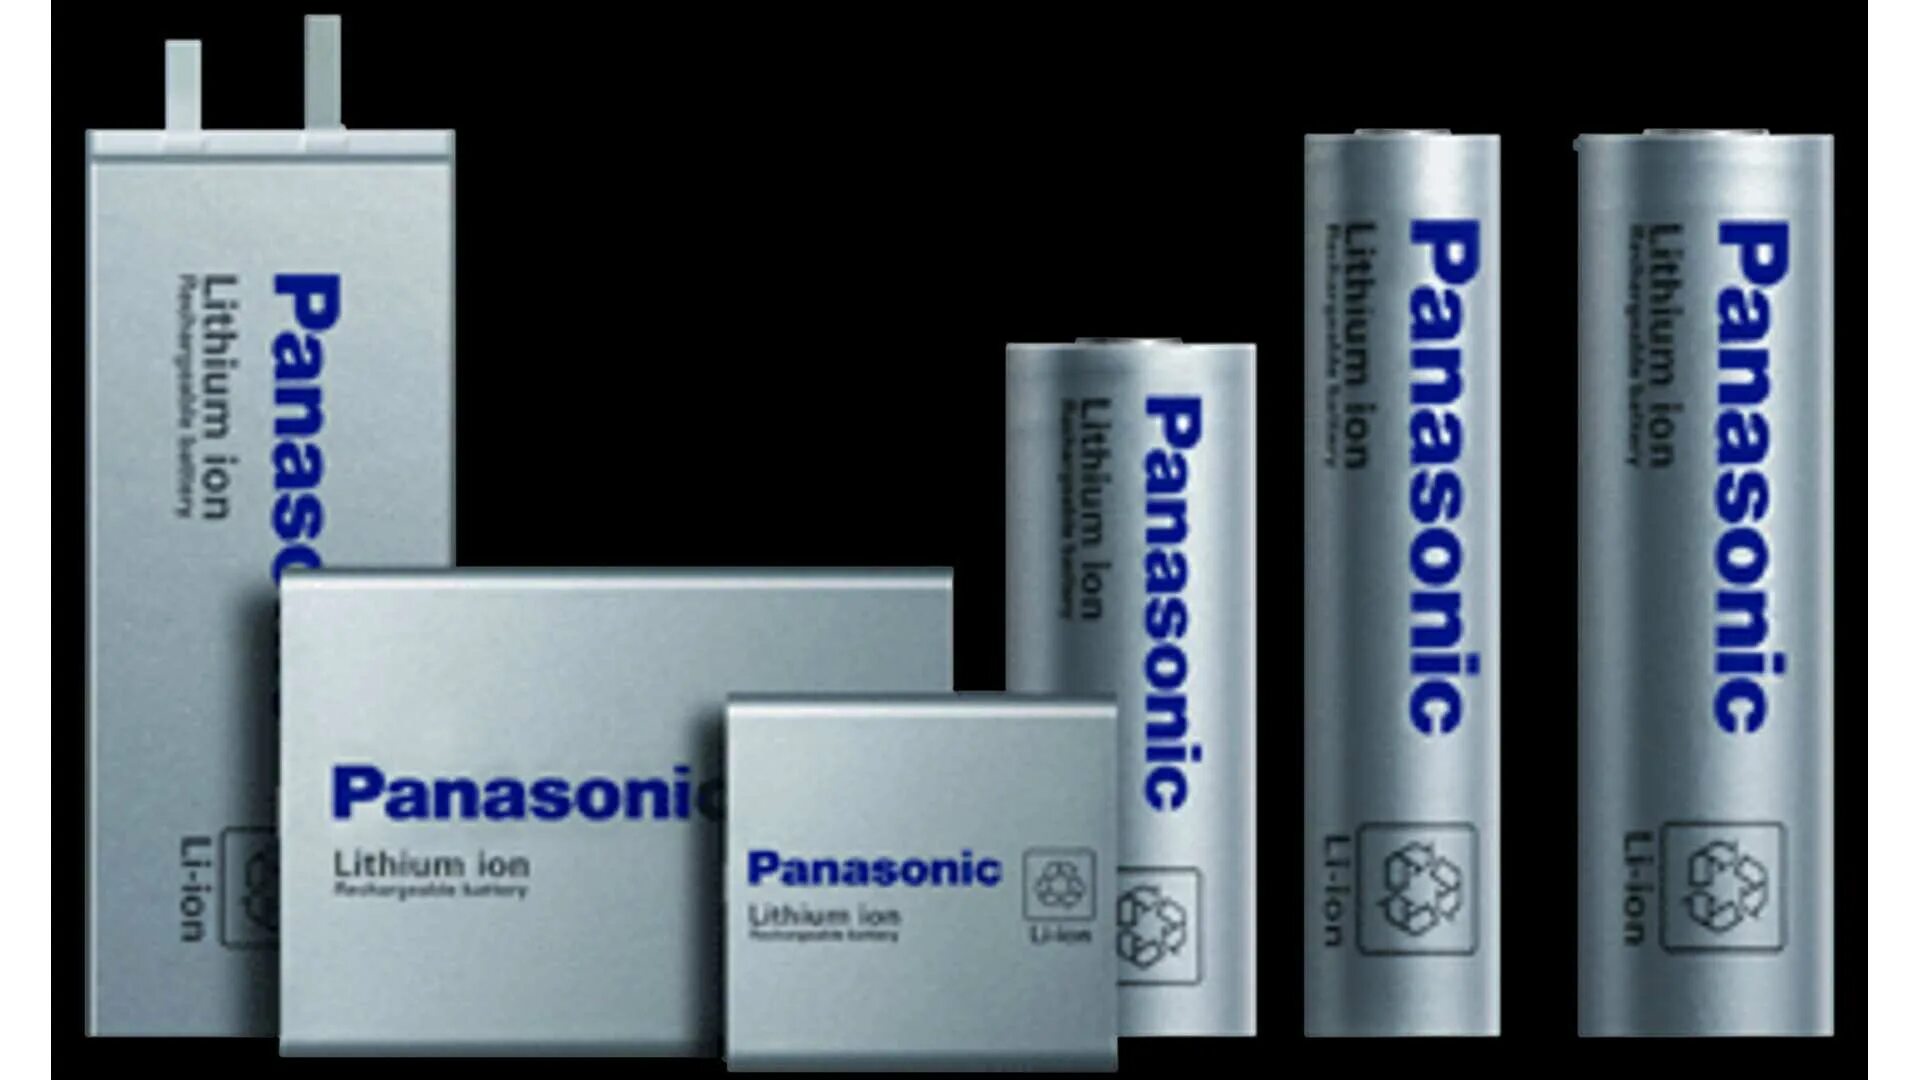 Panasonic batteries. Panasonic Battery. Батарейка Panasonic li-ion regygle. Battery Changer Панасоник. Panasonic li-ion h1226.